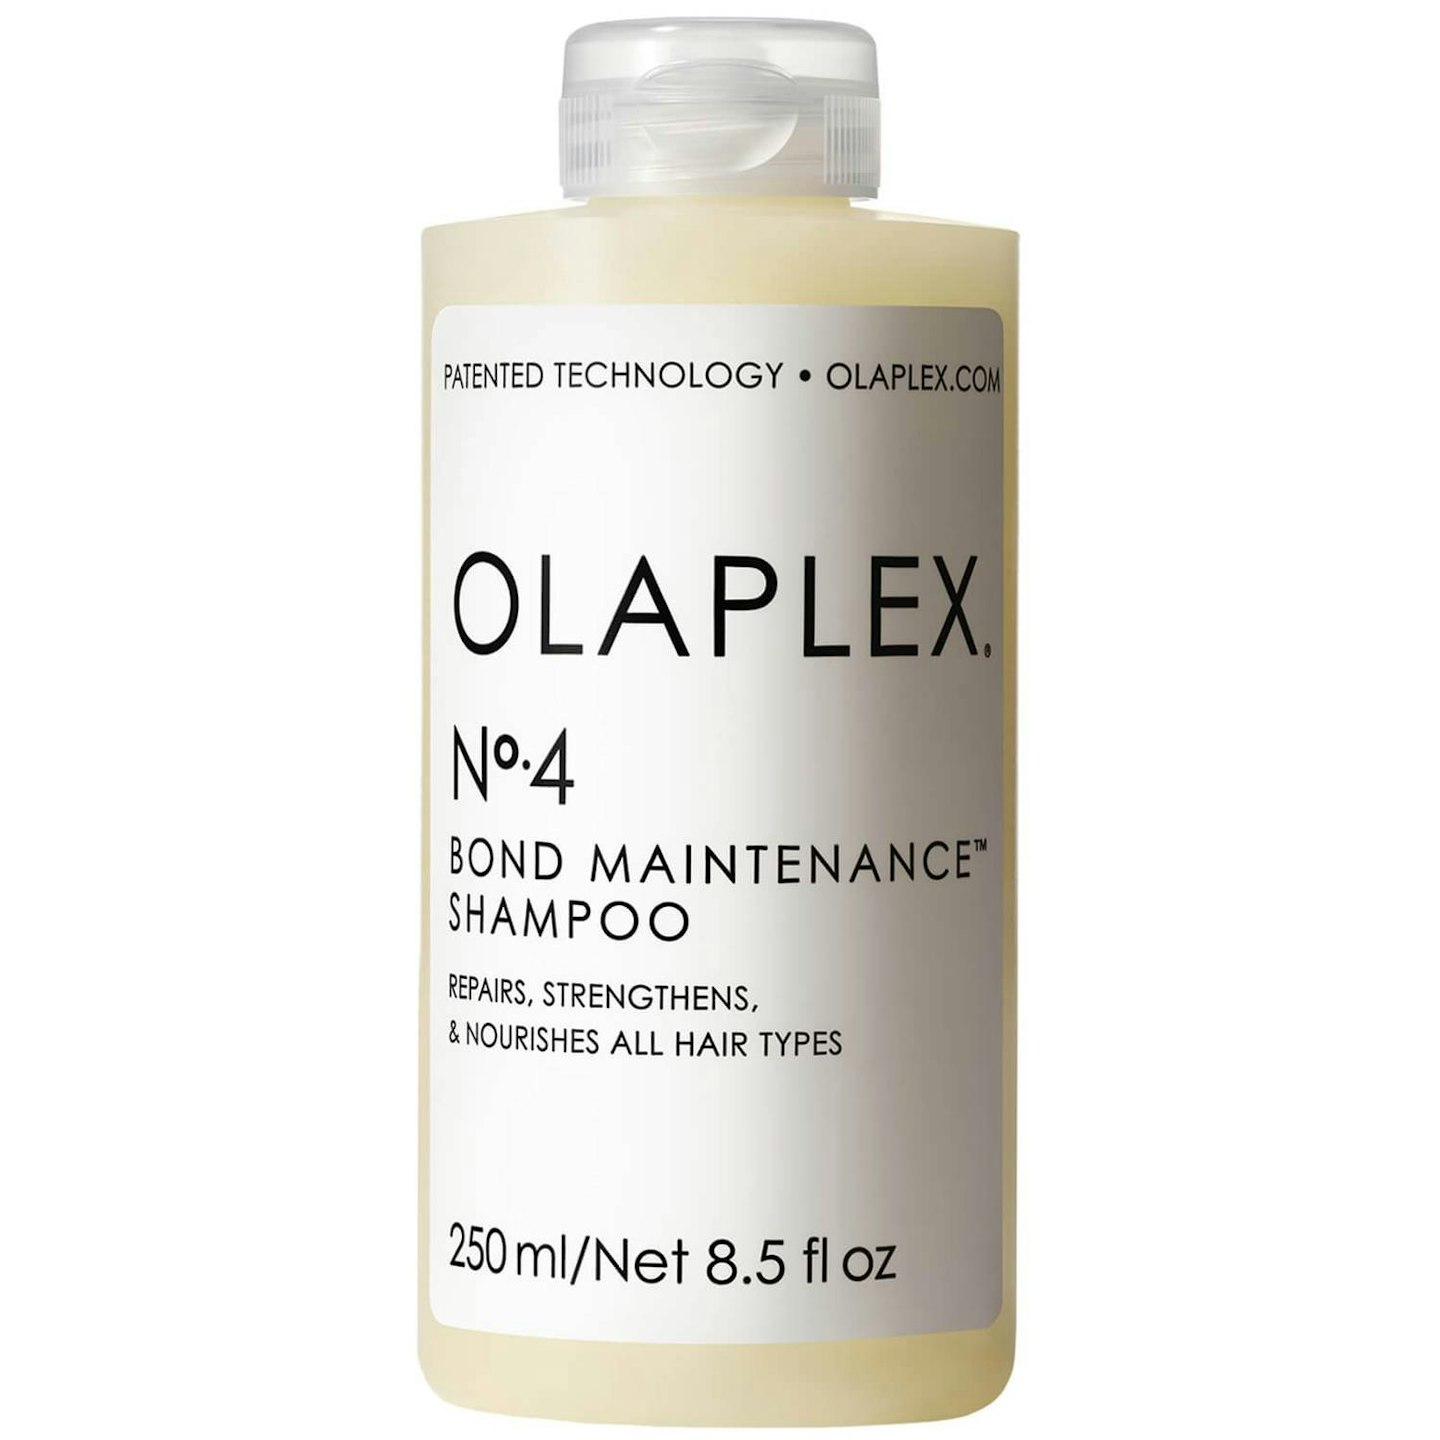 Olaplex shampoo for damaged hair